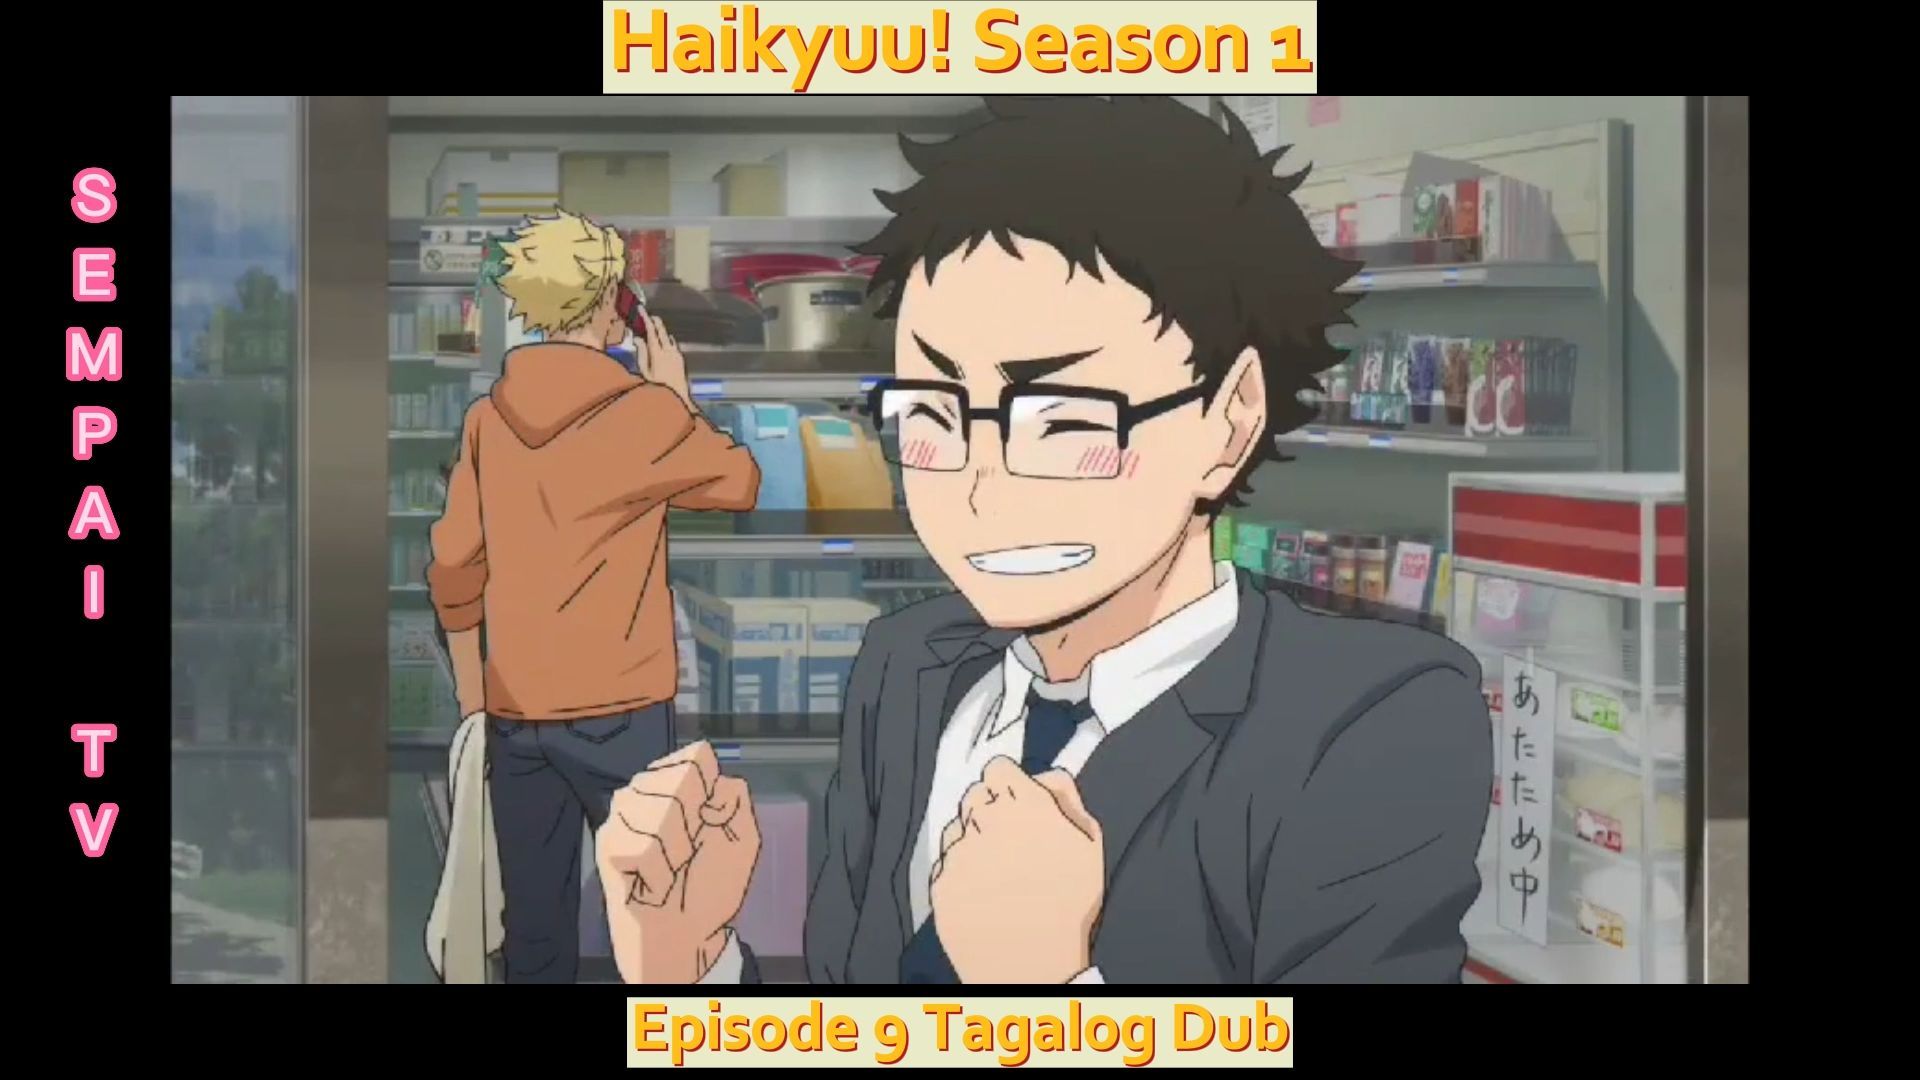 Haikyuu Episode 1 Tagalog Dubbed Part 1, Season 1